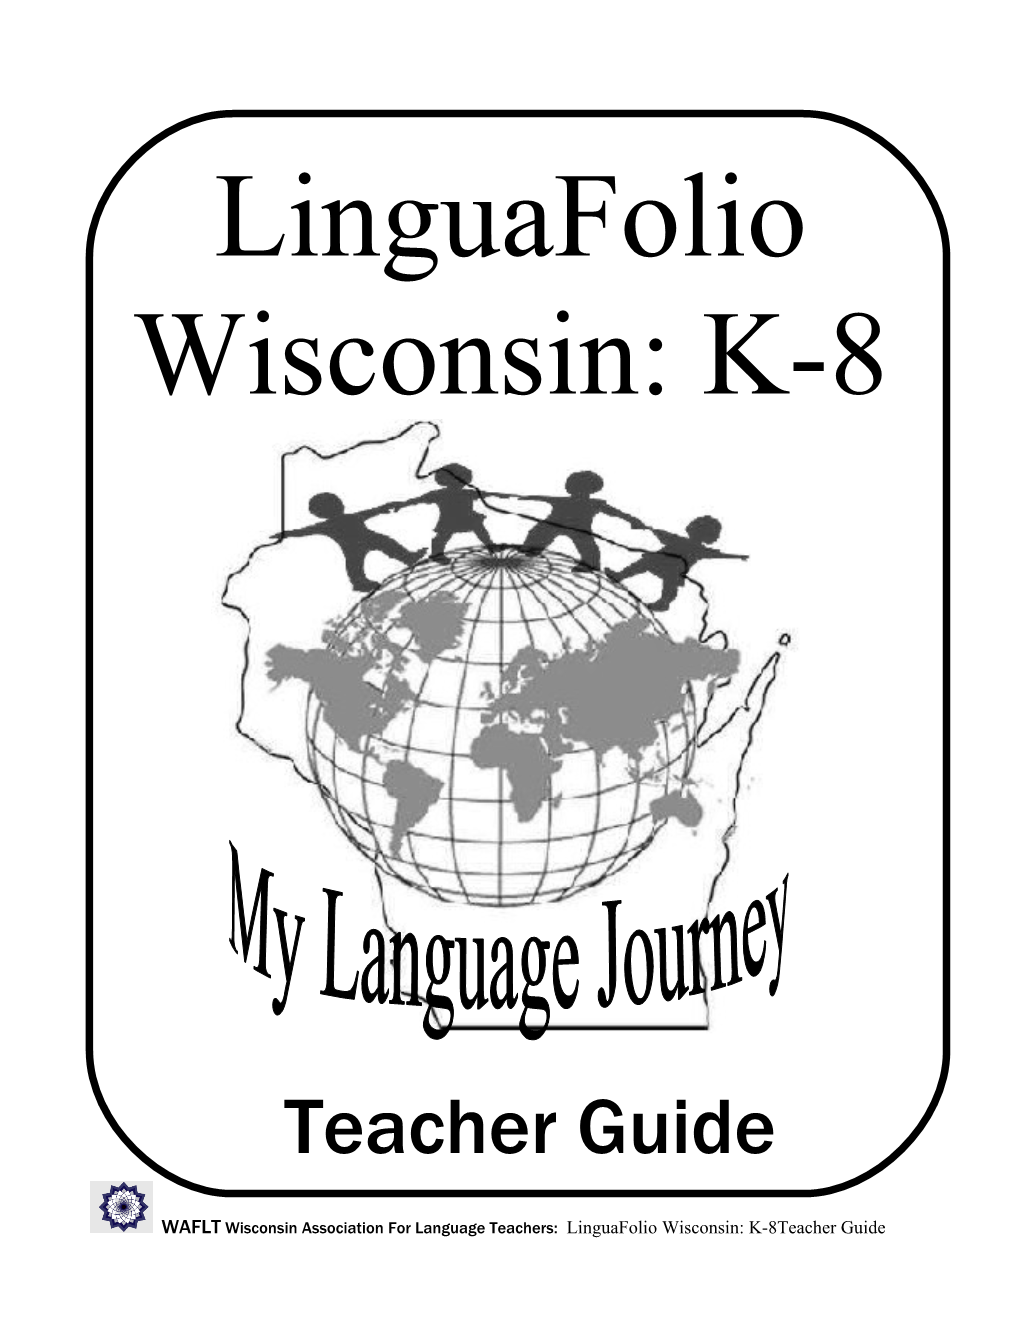 WAFLT Wisconsin Association for Language Teachers: Linguafolio Wisconsin Teacher Guide